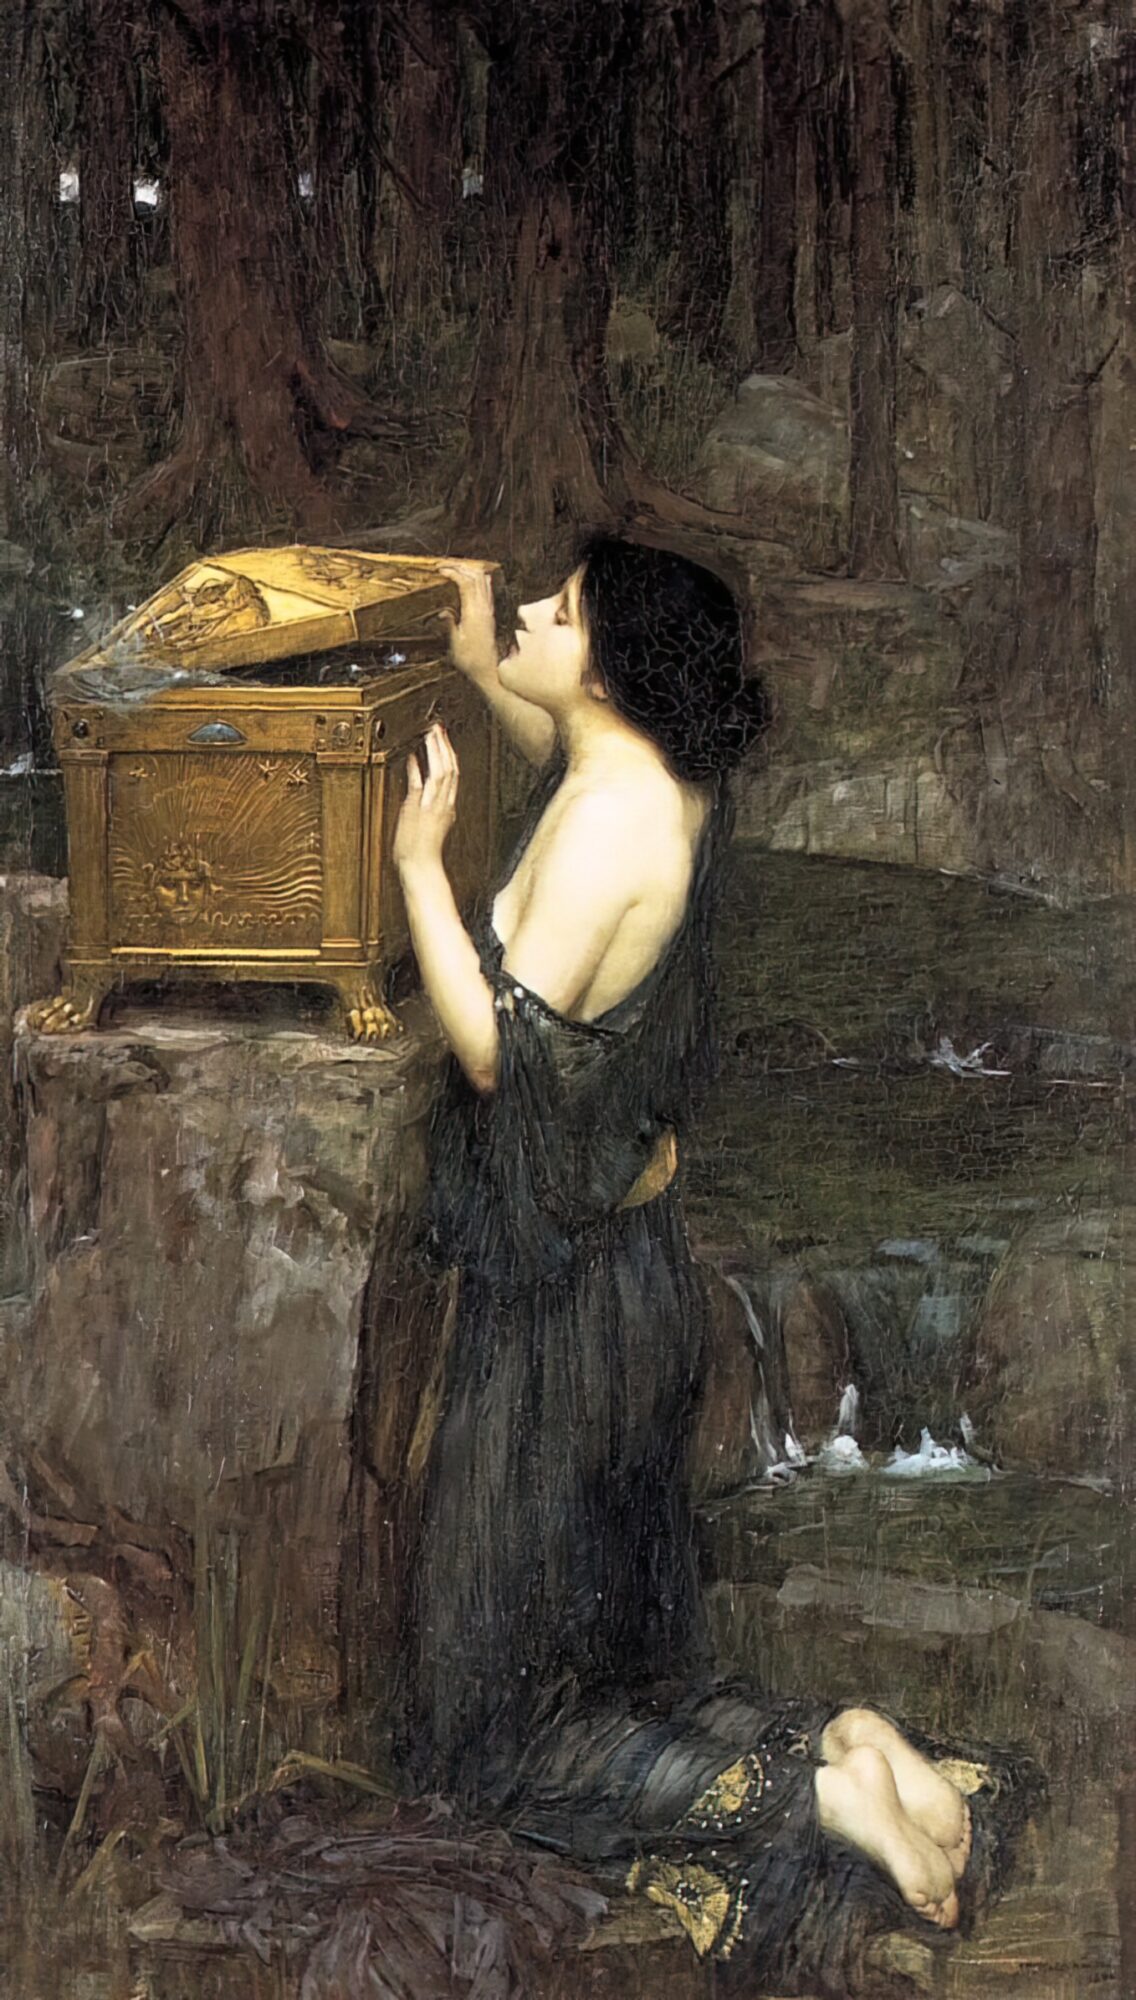 Pandora (1896) by John William Waterhouse (English, 1849-1917)